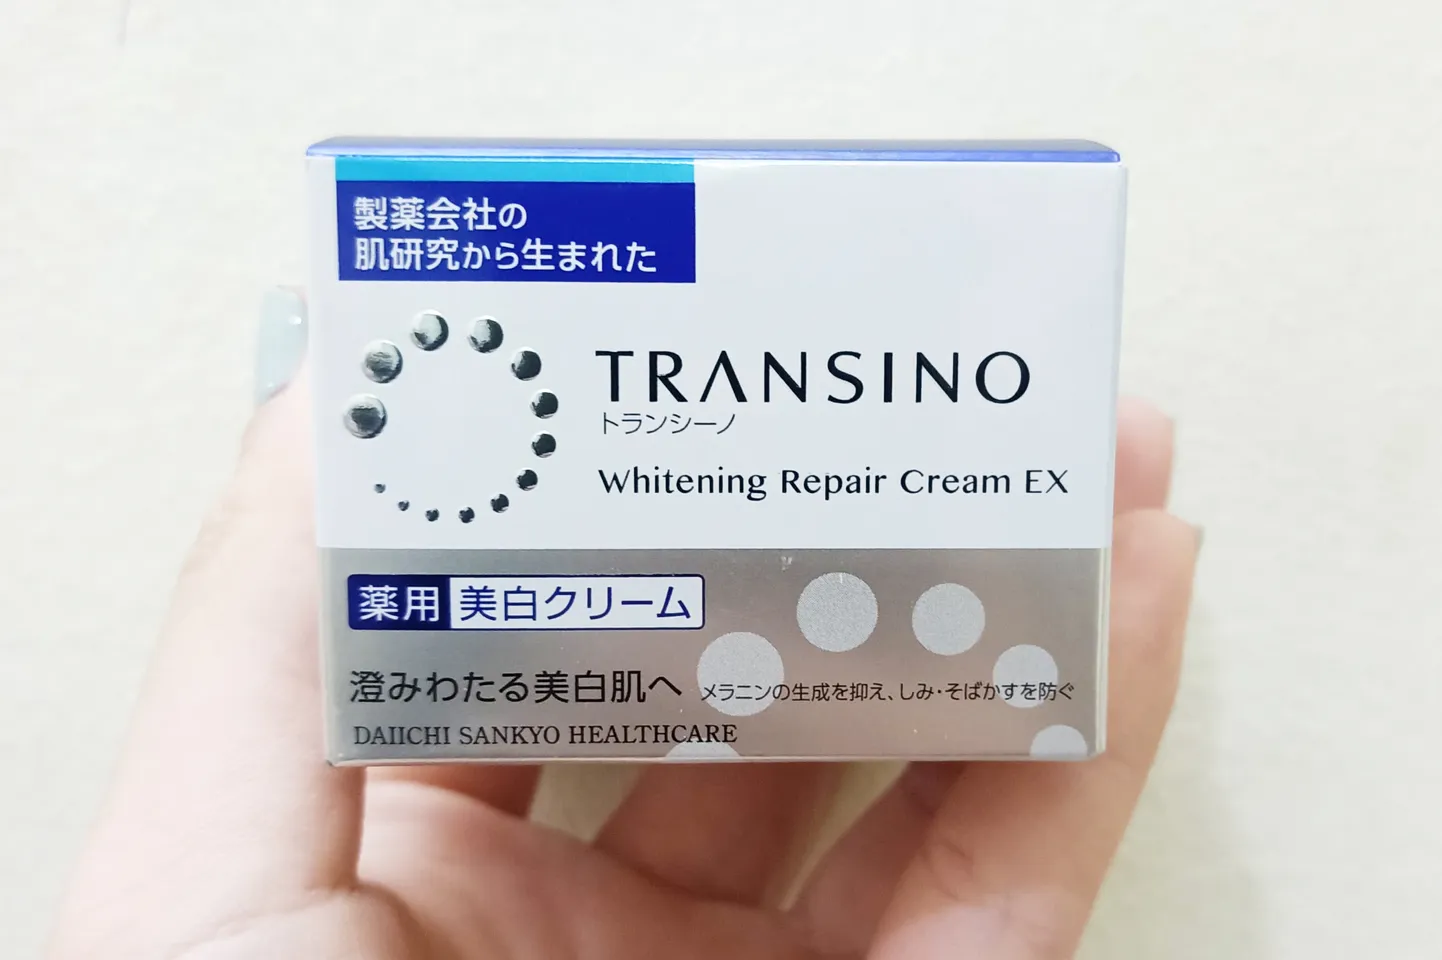 Kem dưỡng trắng Transino Whitening Repair Cream mẫu mới